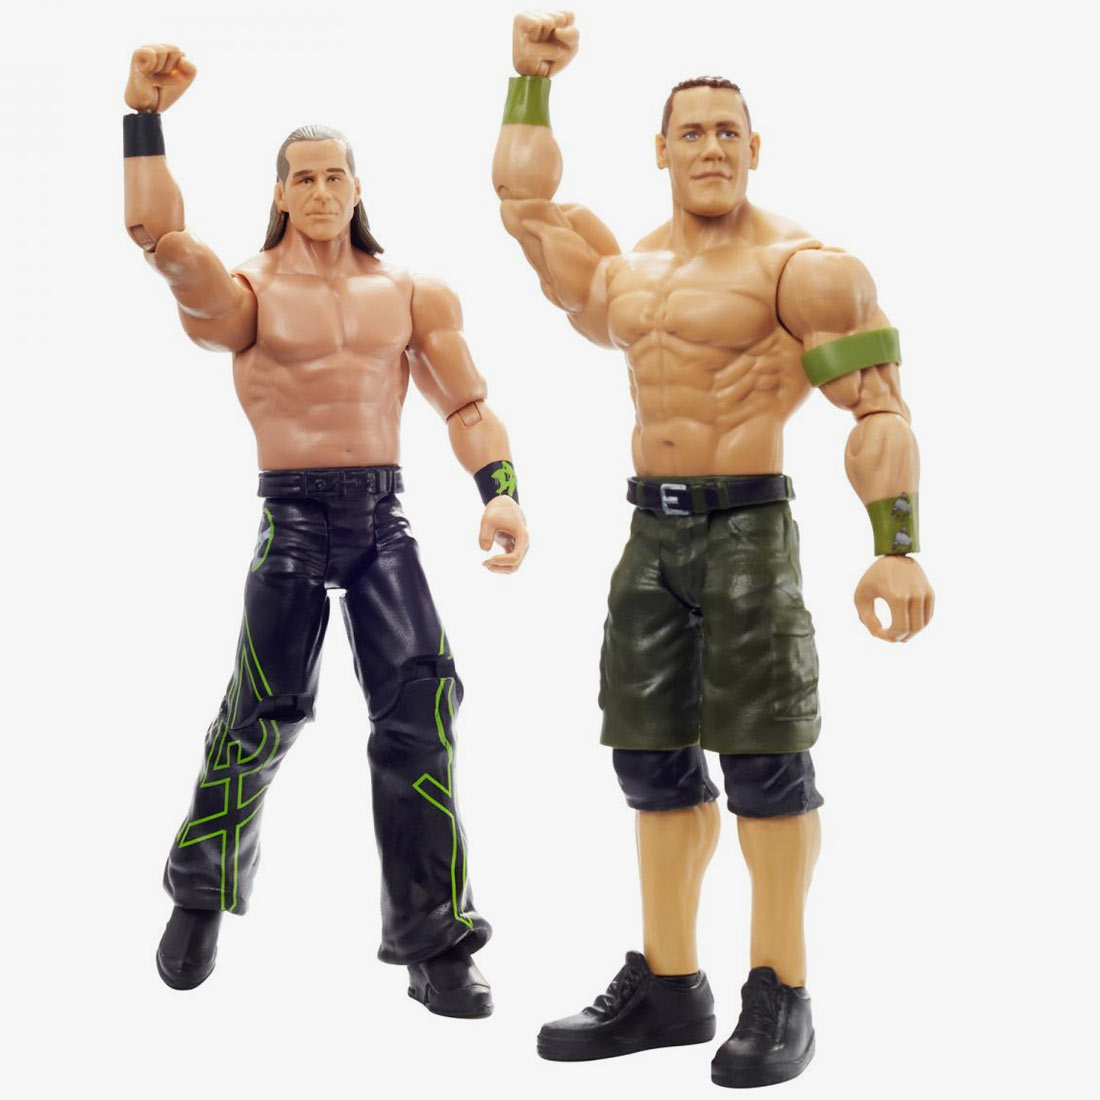 Shawn Michaels & John Cena - WWE Championship Showdown 2-Pack Series #6